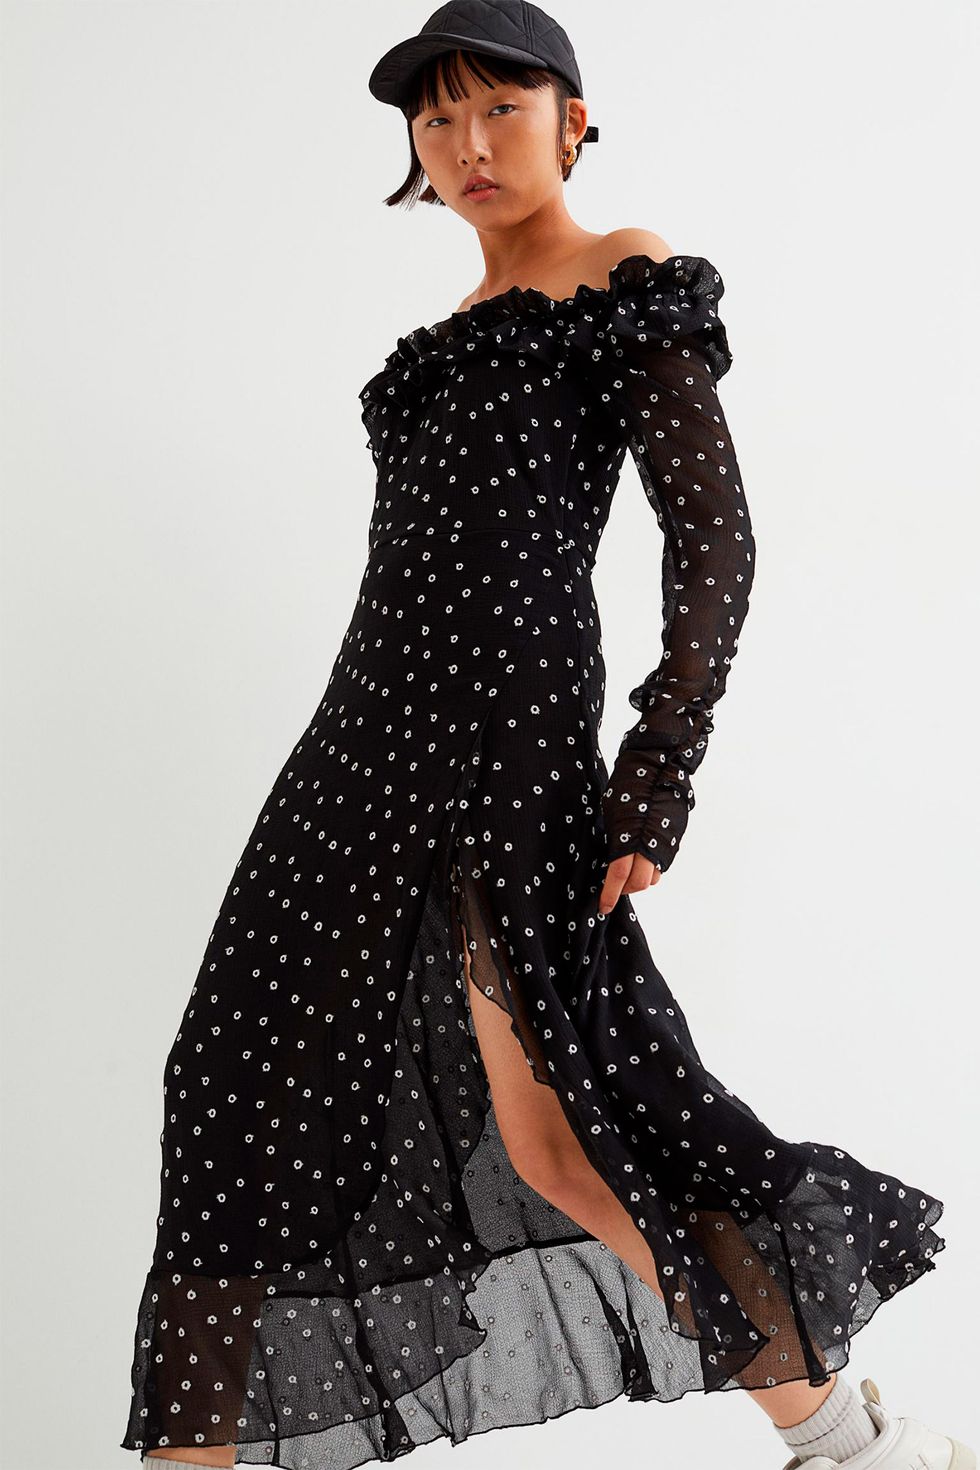 Este vestido lunares de manga larga de H&M es ideal